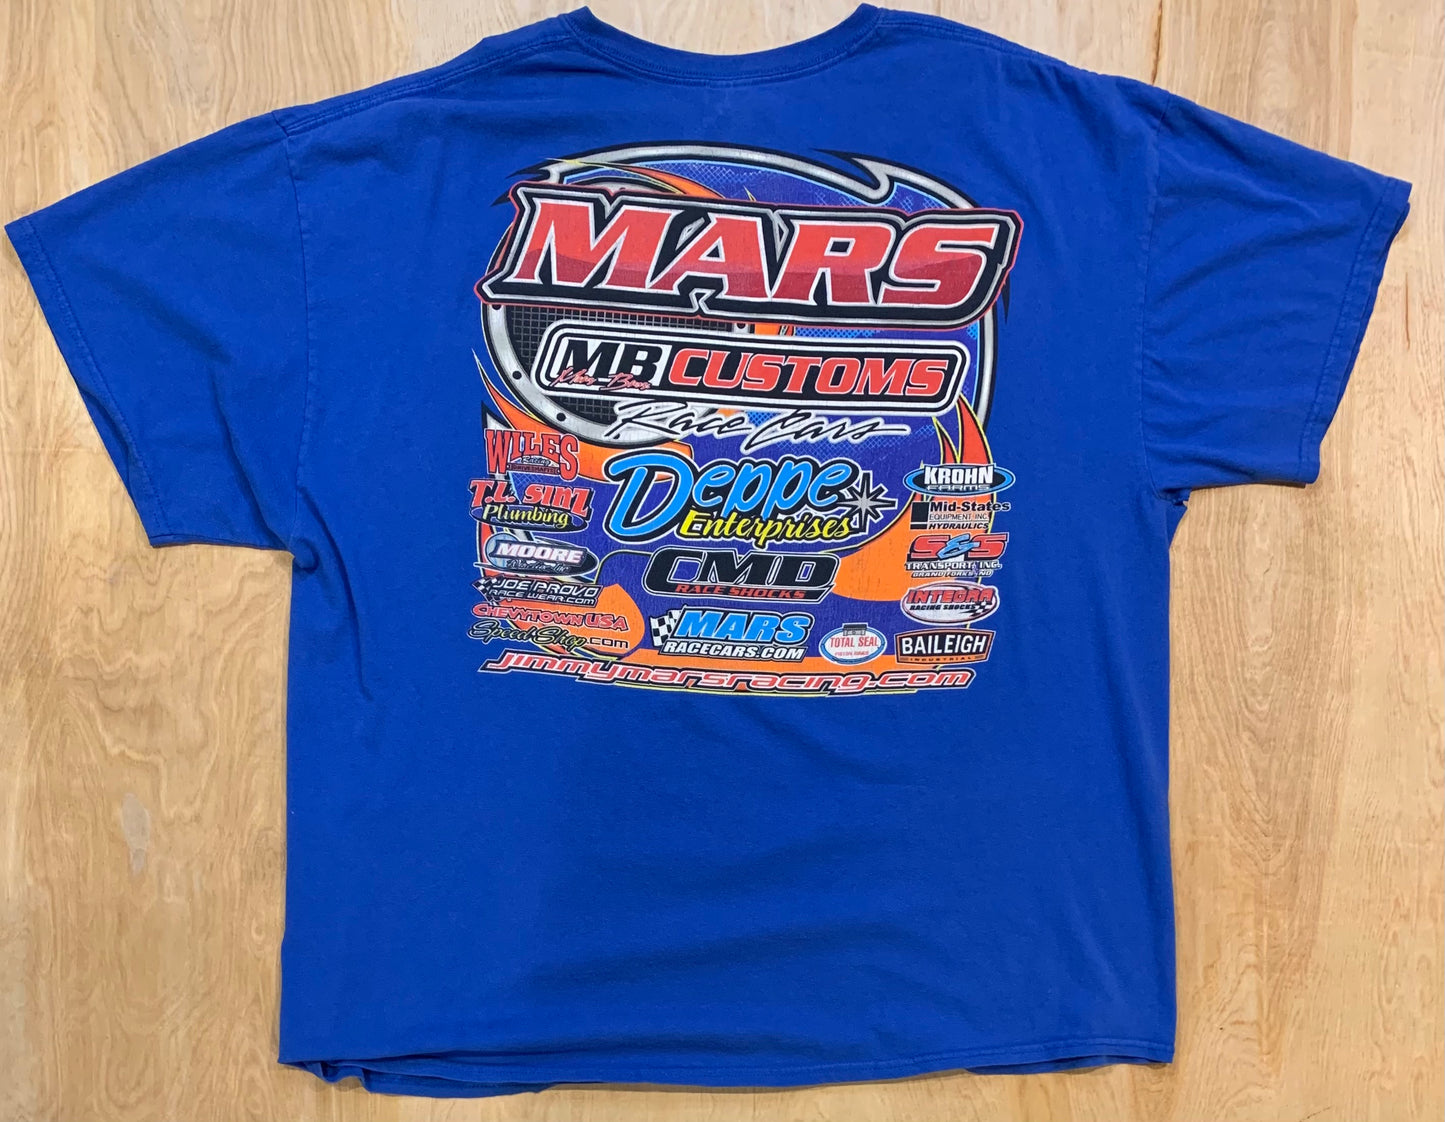 Vintage Jimmy Mars Racing T-shirt